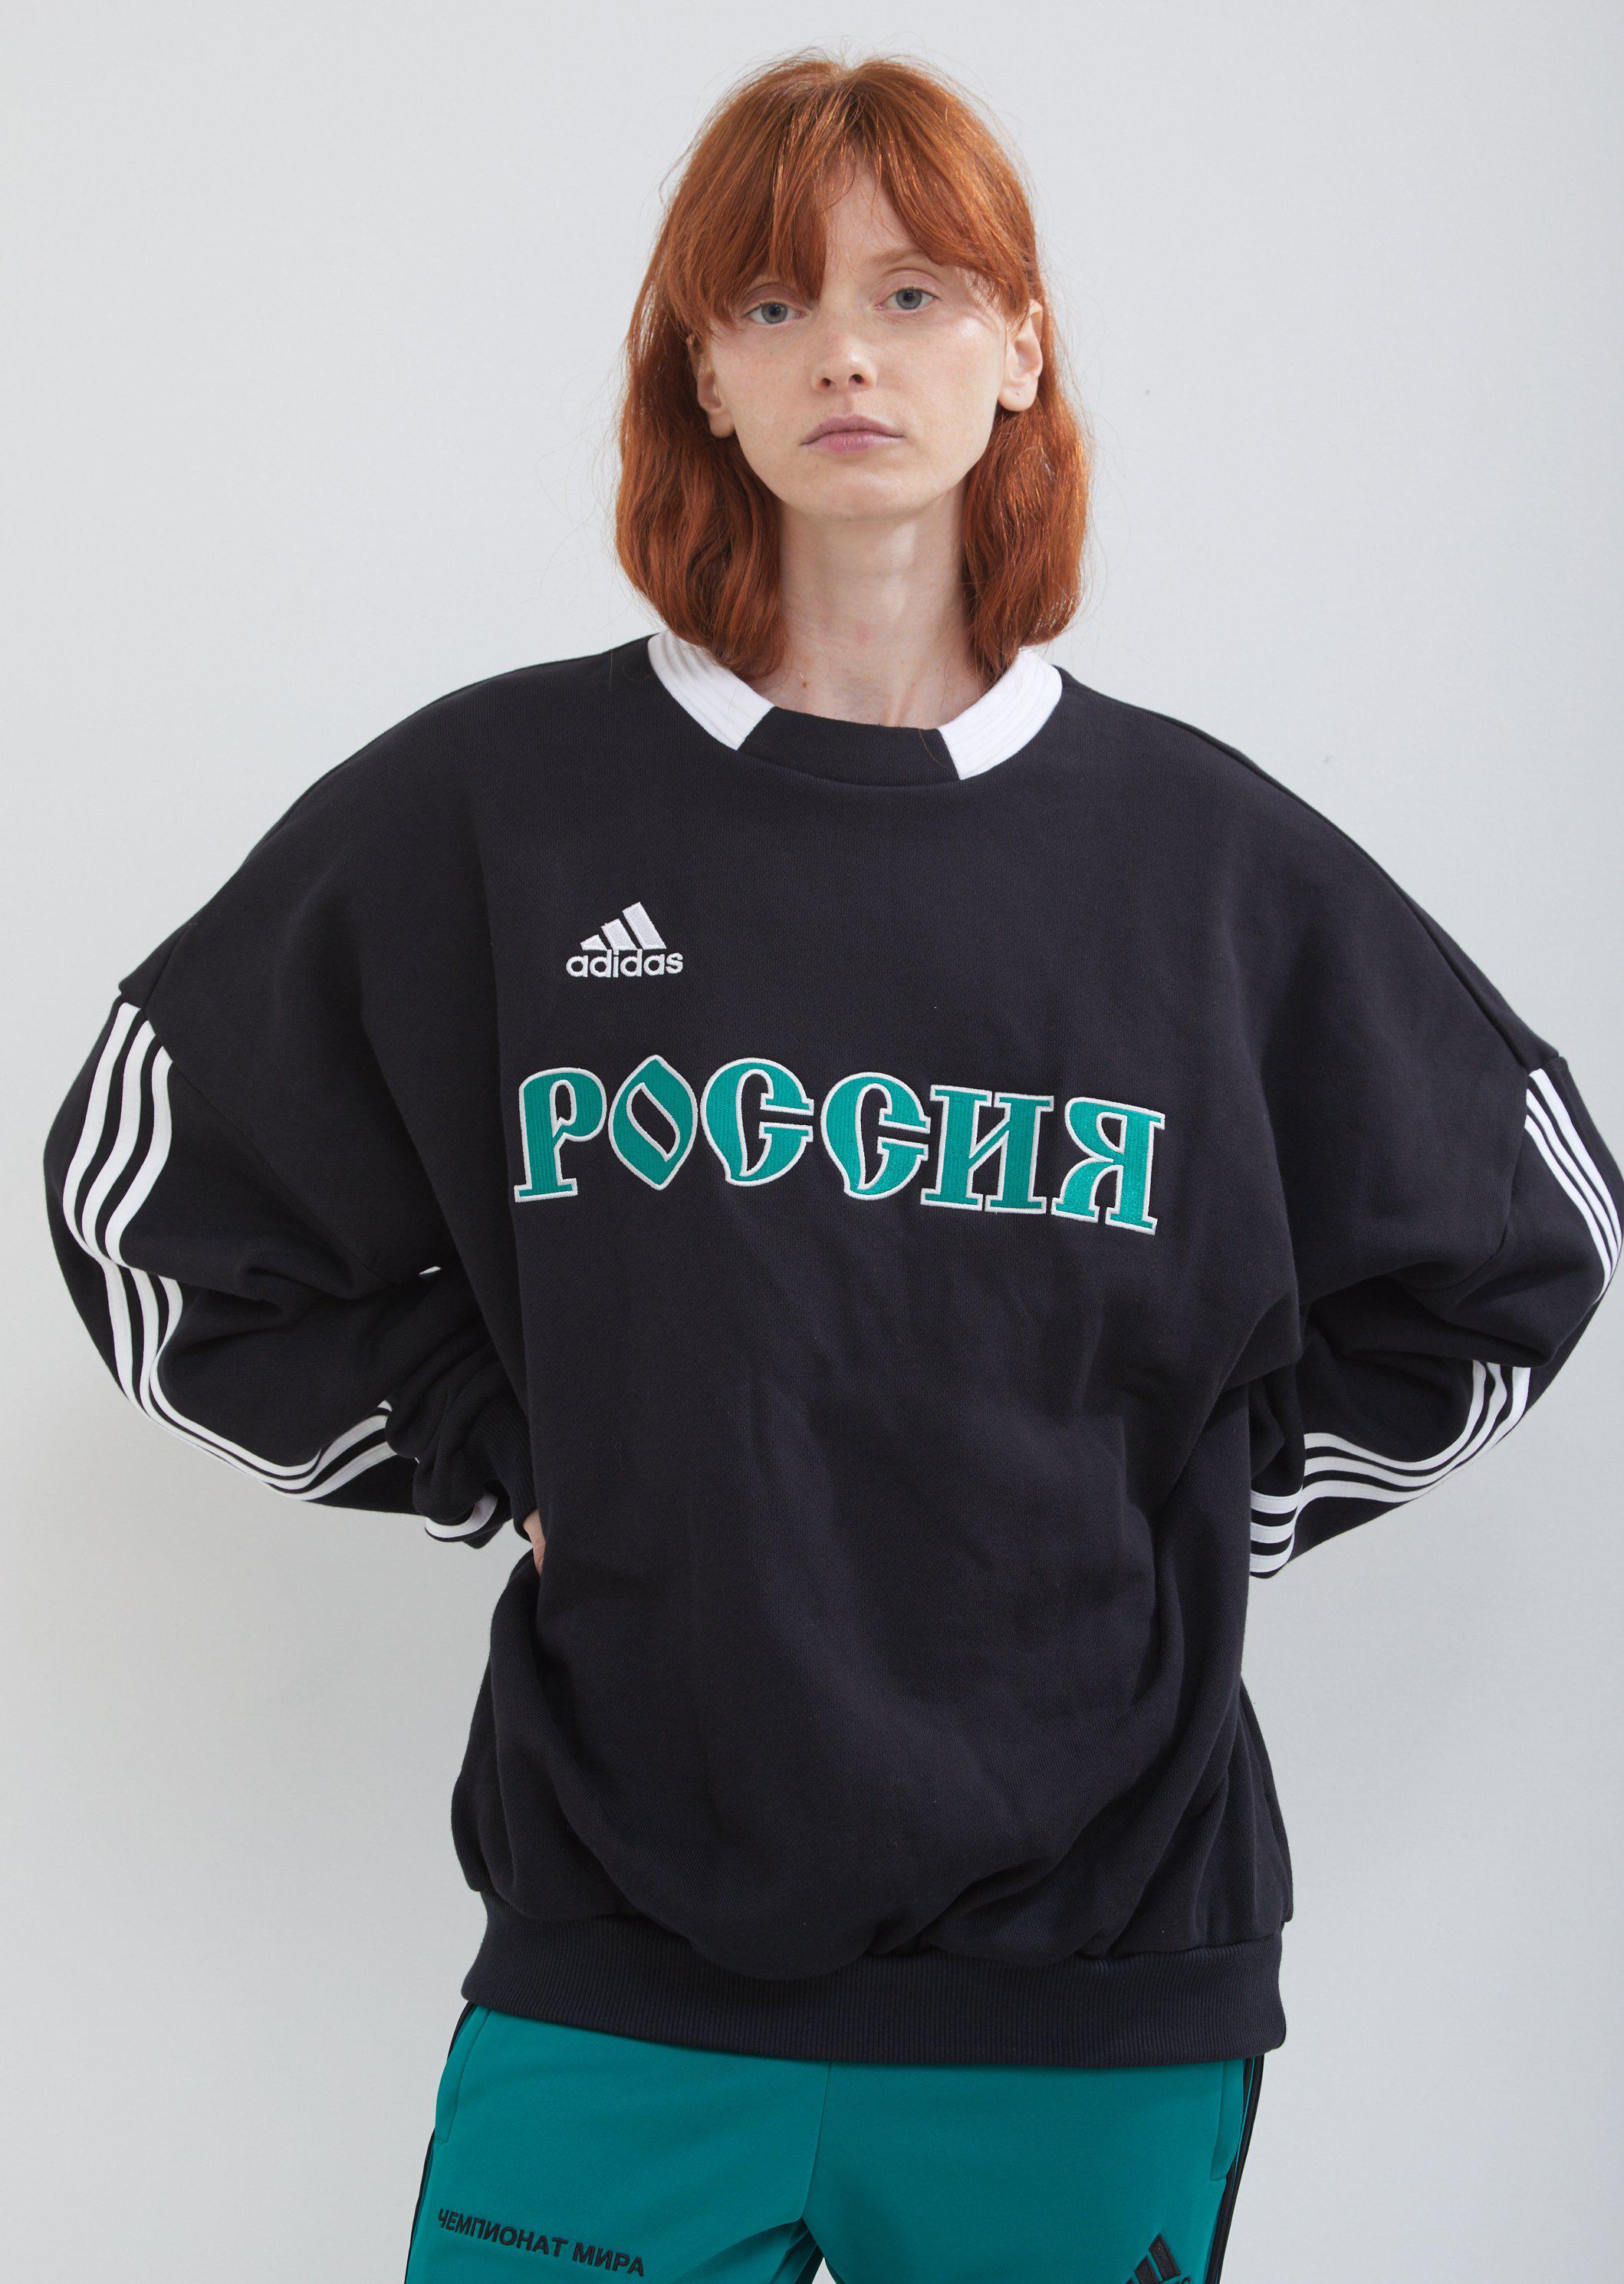 Gosha Rubchinskiy Cotton Black Adidas Originals Edition Sweatshirt - Lyst